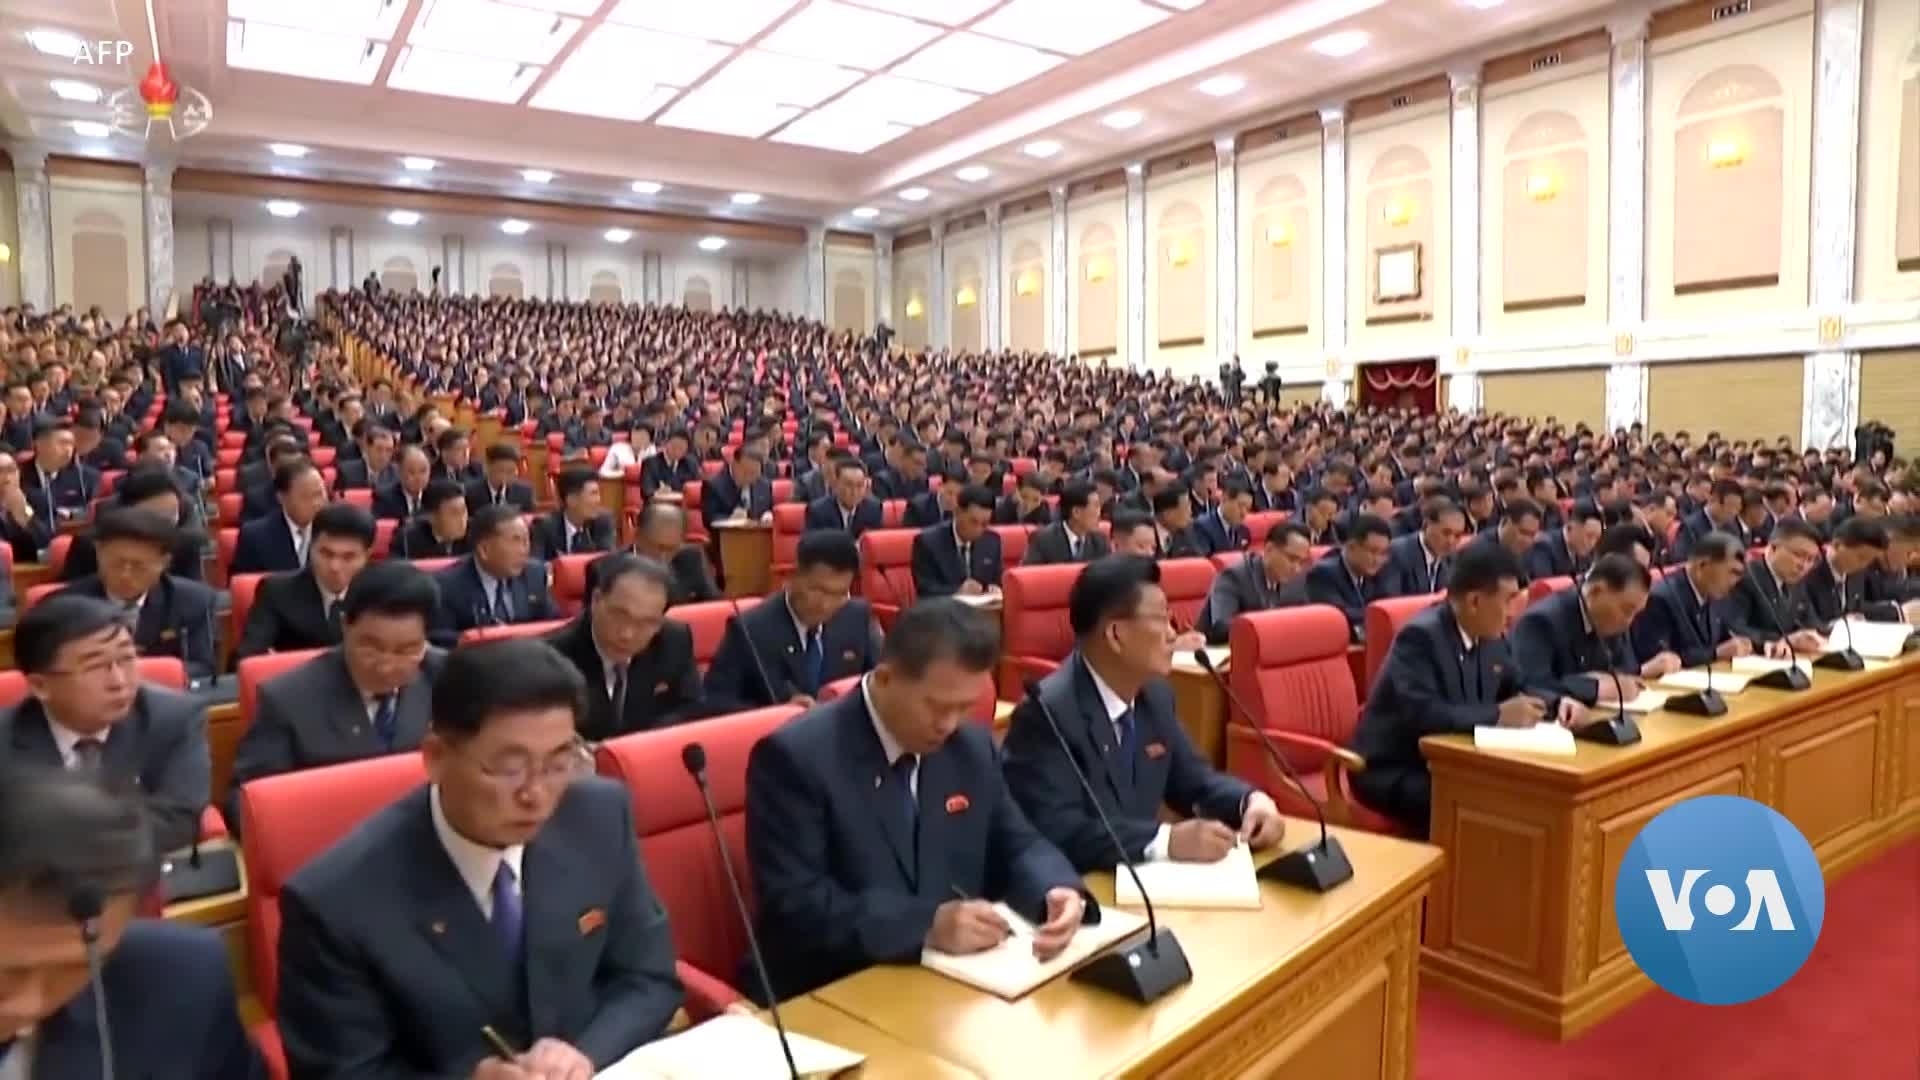 North Korea Faces Worsening Economic Woes Amid COVID Lockdown